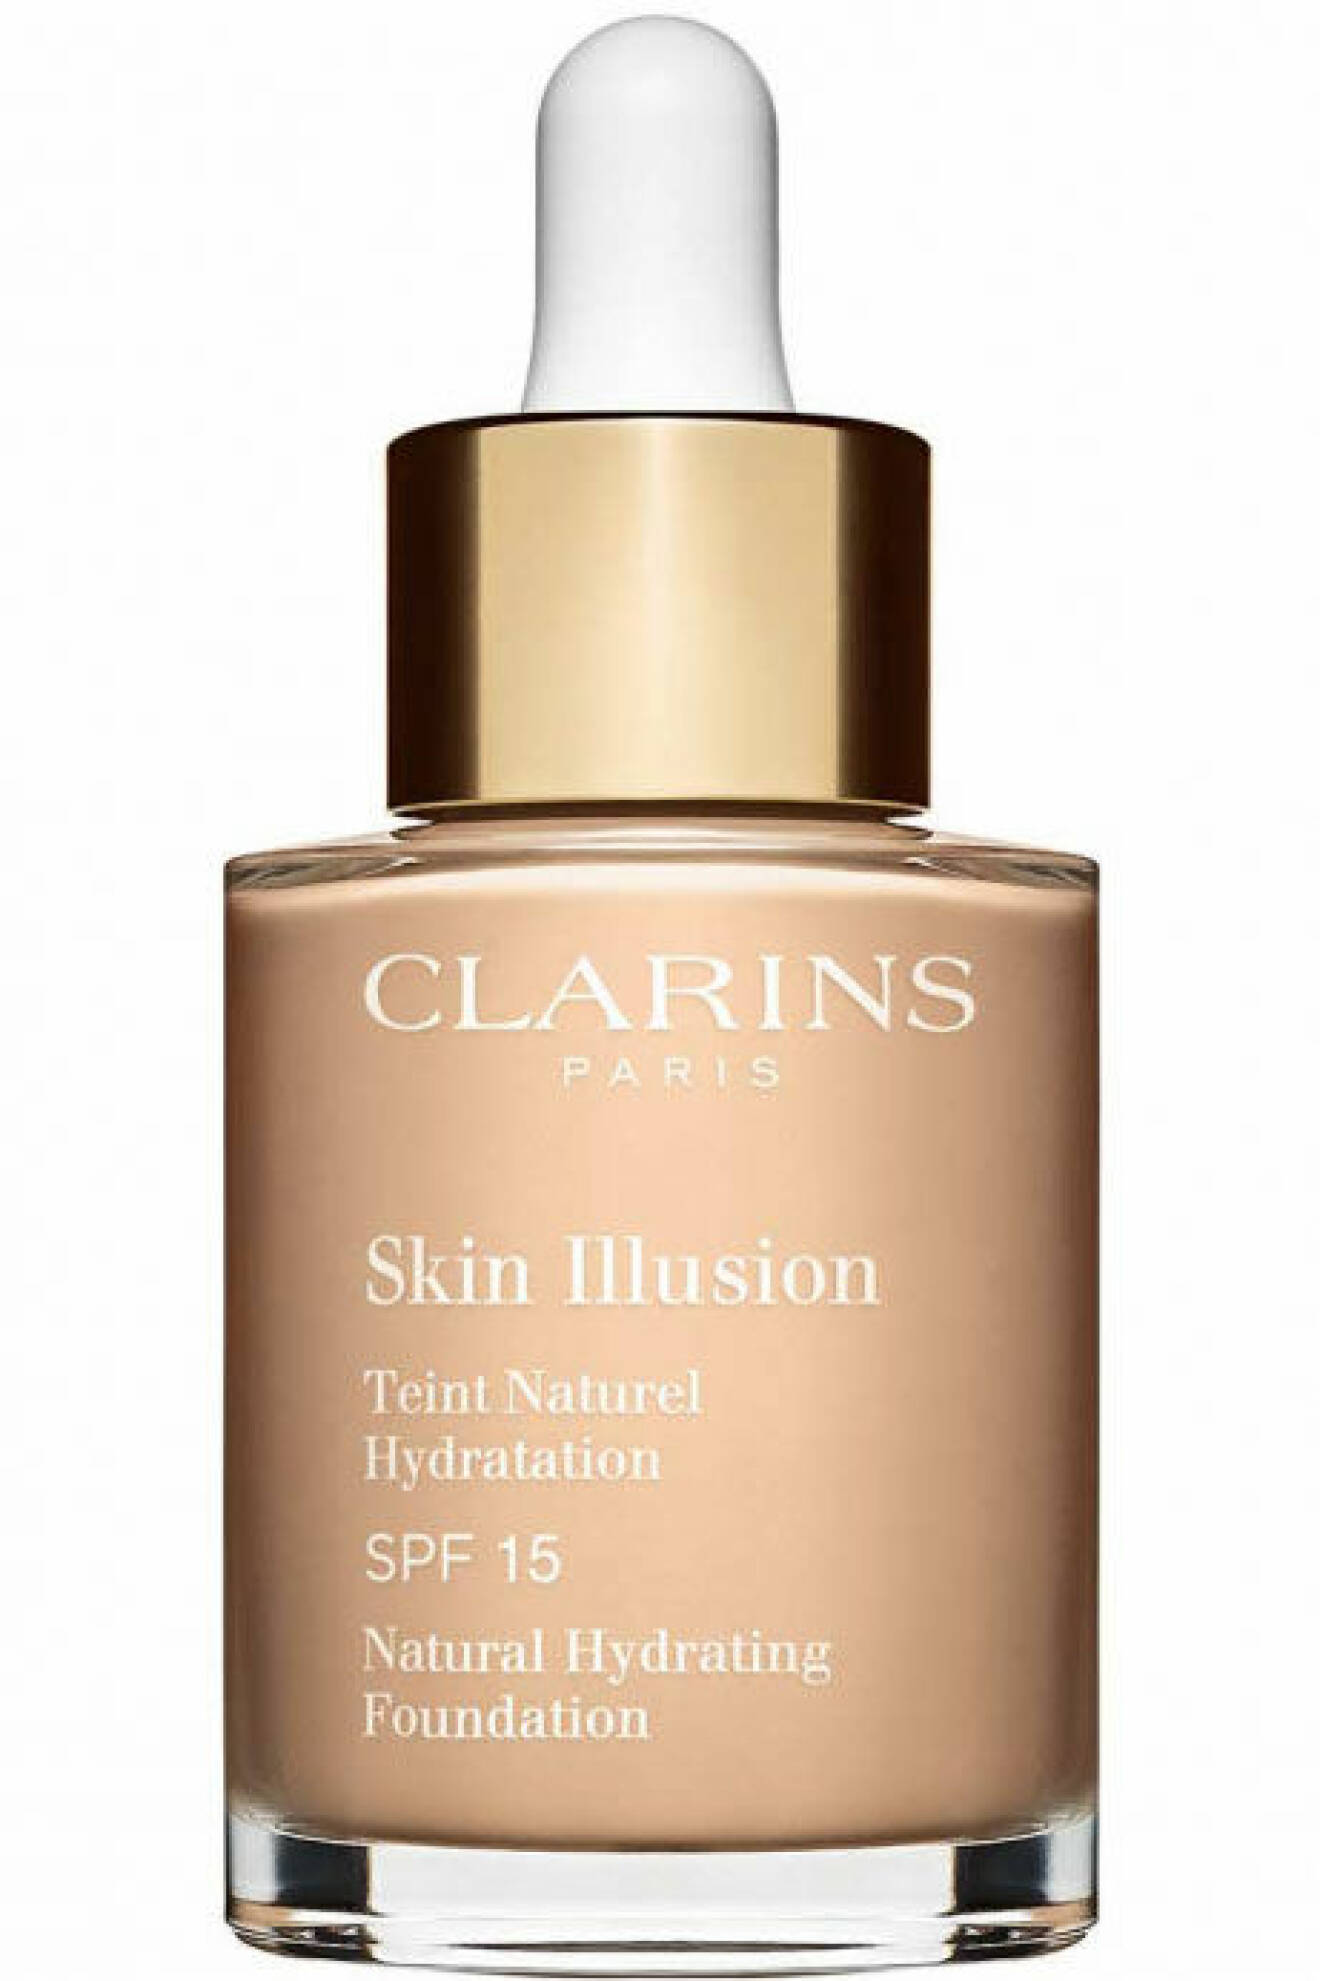 Clarins Skin Illusion Spf 15